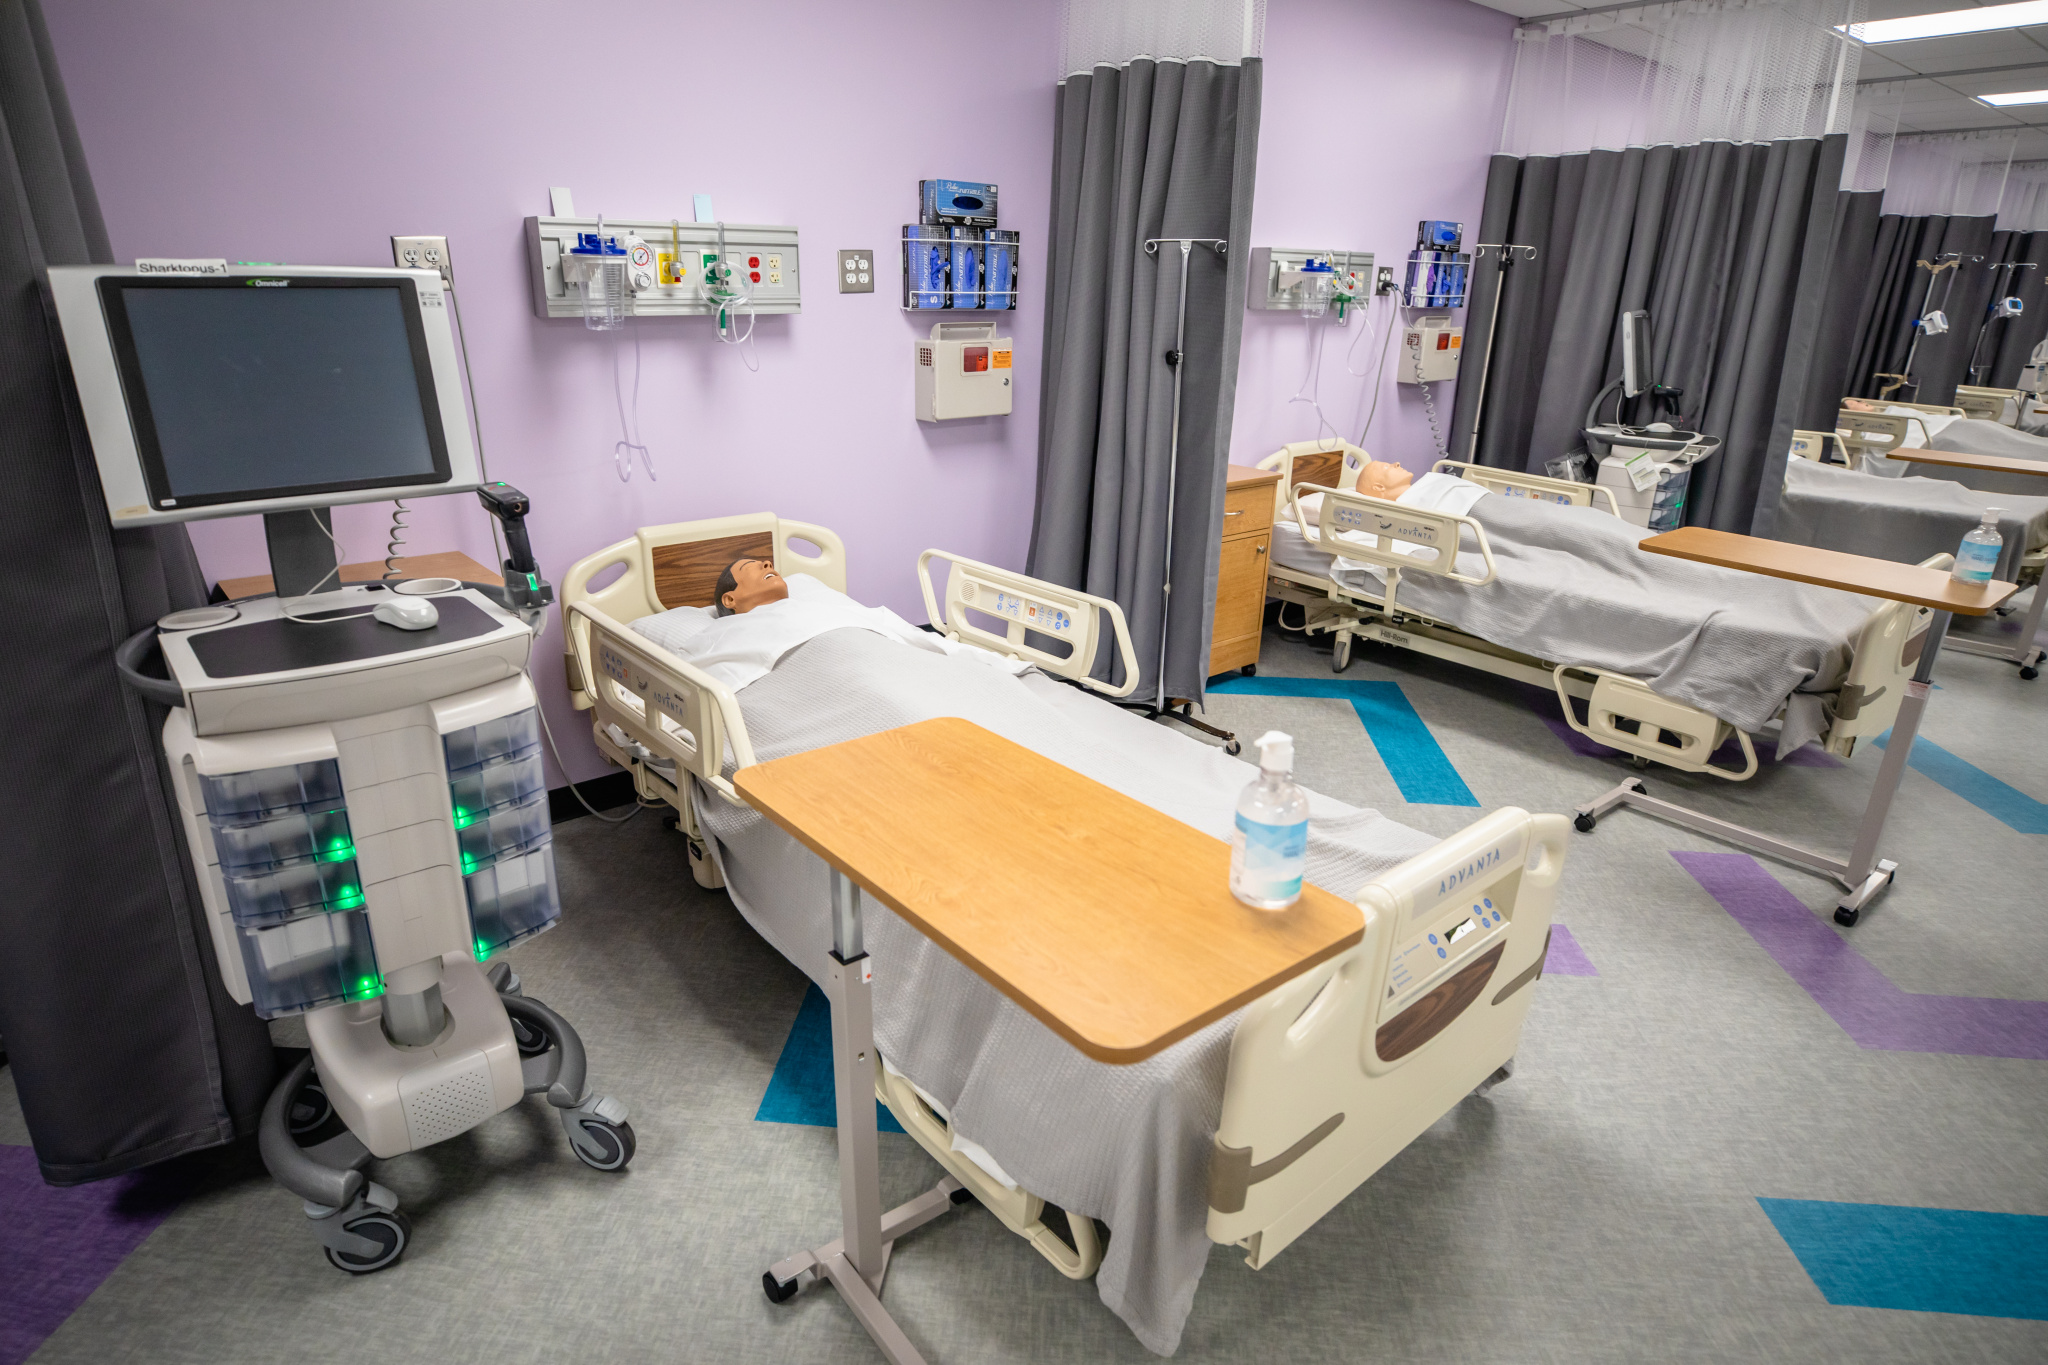 Photo of a bed in the nursing lab (Photo by Derek Eckenroth)